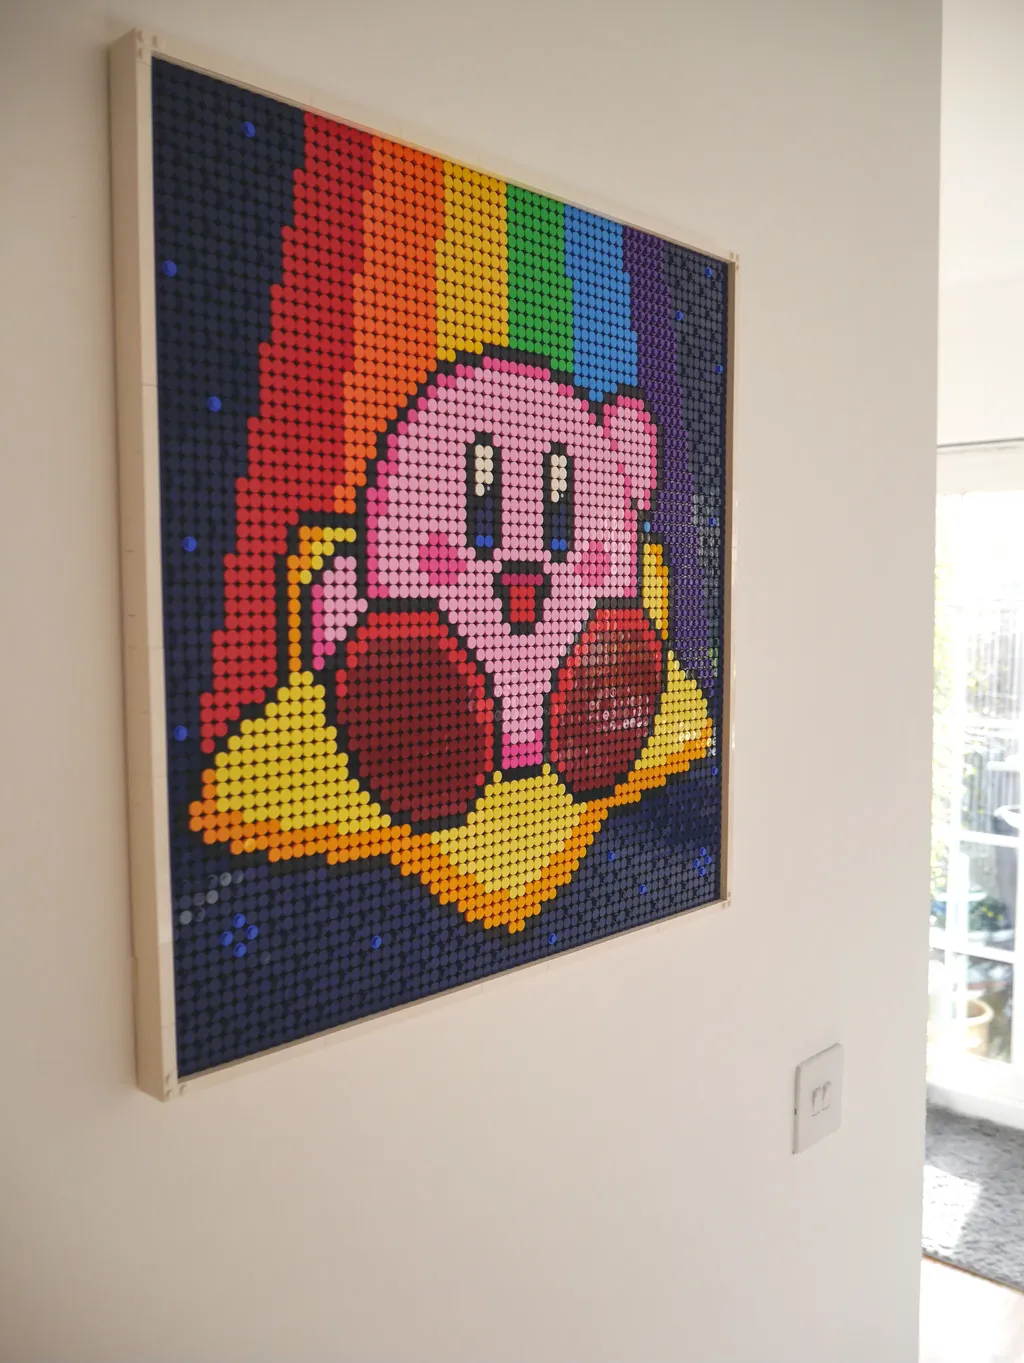 Lego Kirby artwork hanging on wall